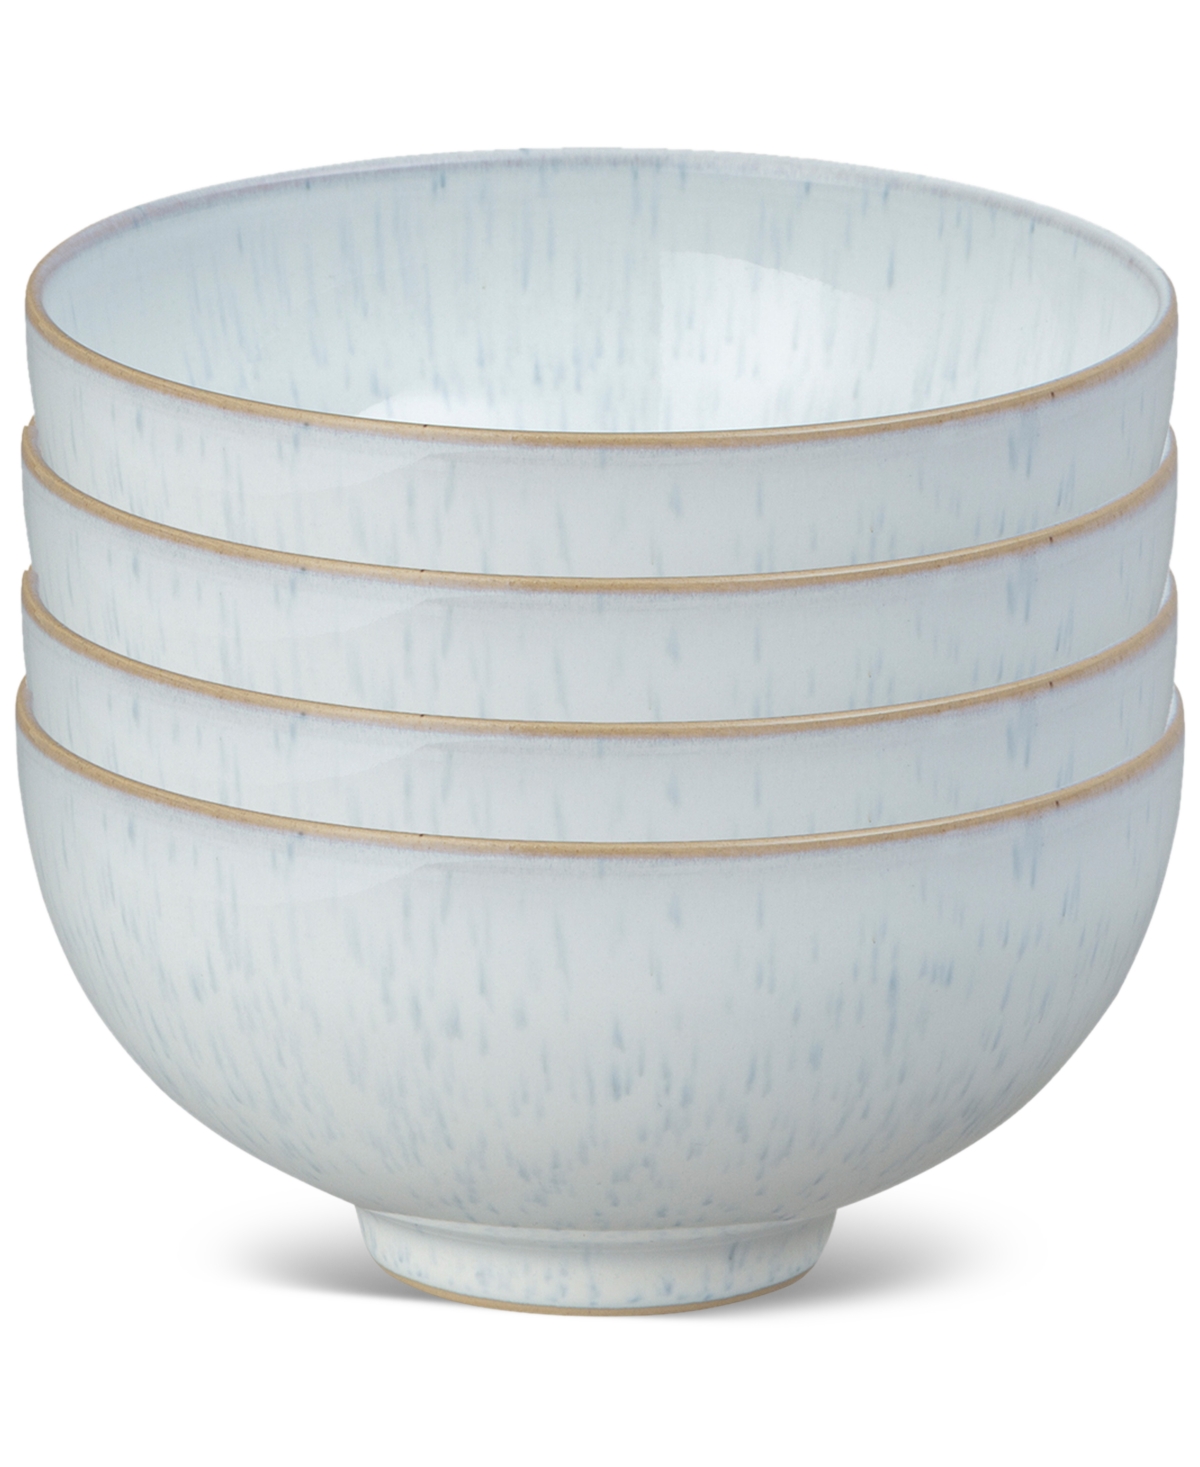 White Speckle Stoneware Rice Bowls, Set of 4 - White